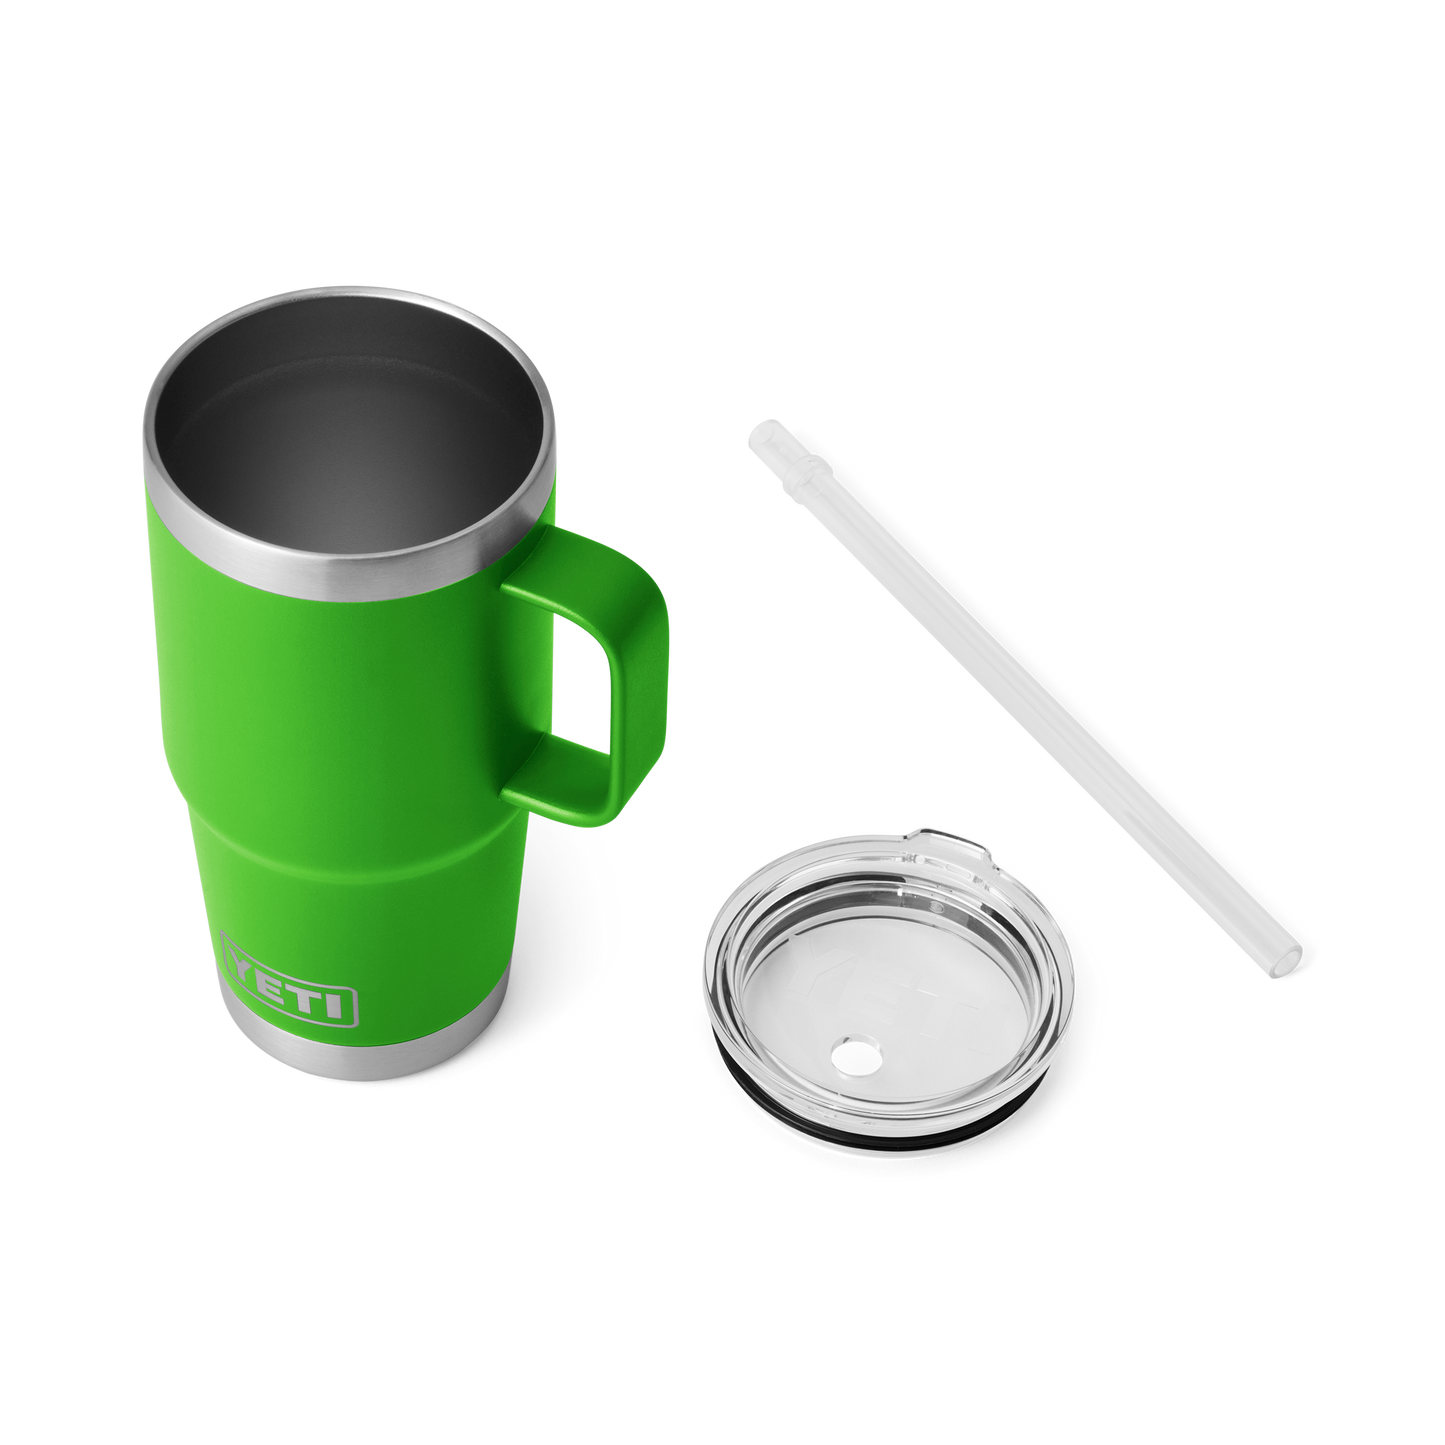 YETI Rambler® 25 oz (710 ml) Straw Mug Canopy Green